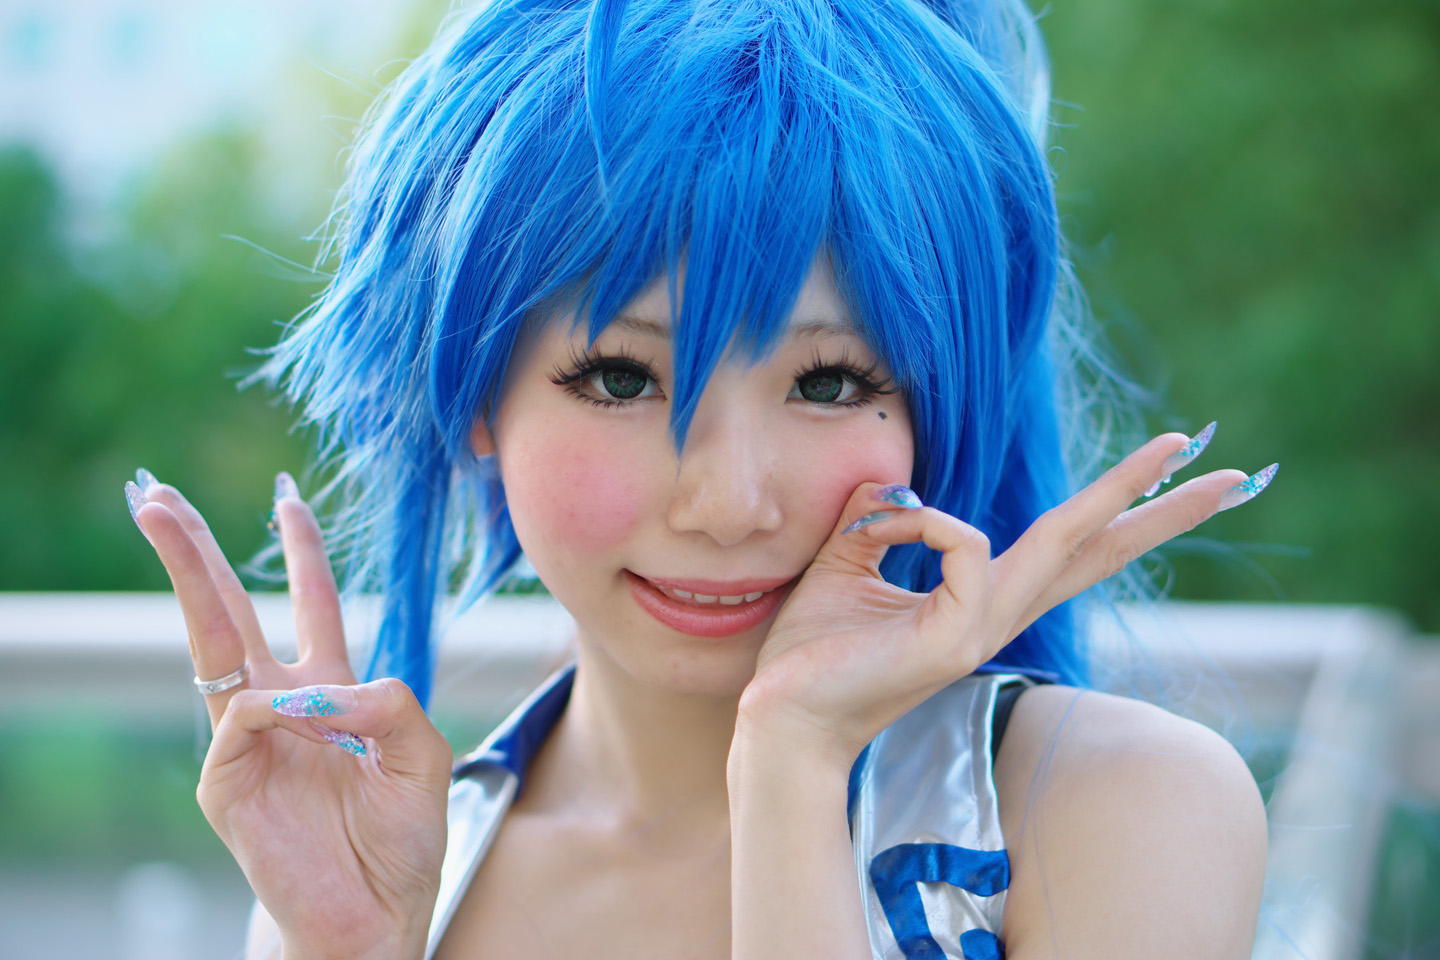 7. Ameri Ichinose - Blue Hair Cosplay - wide 4